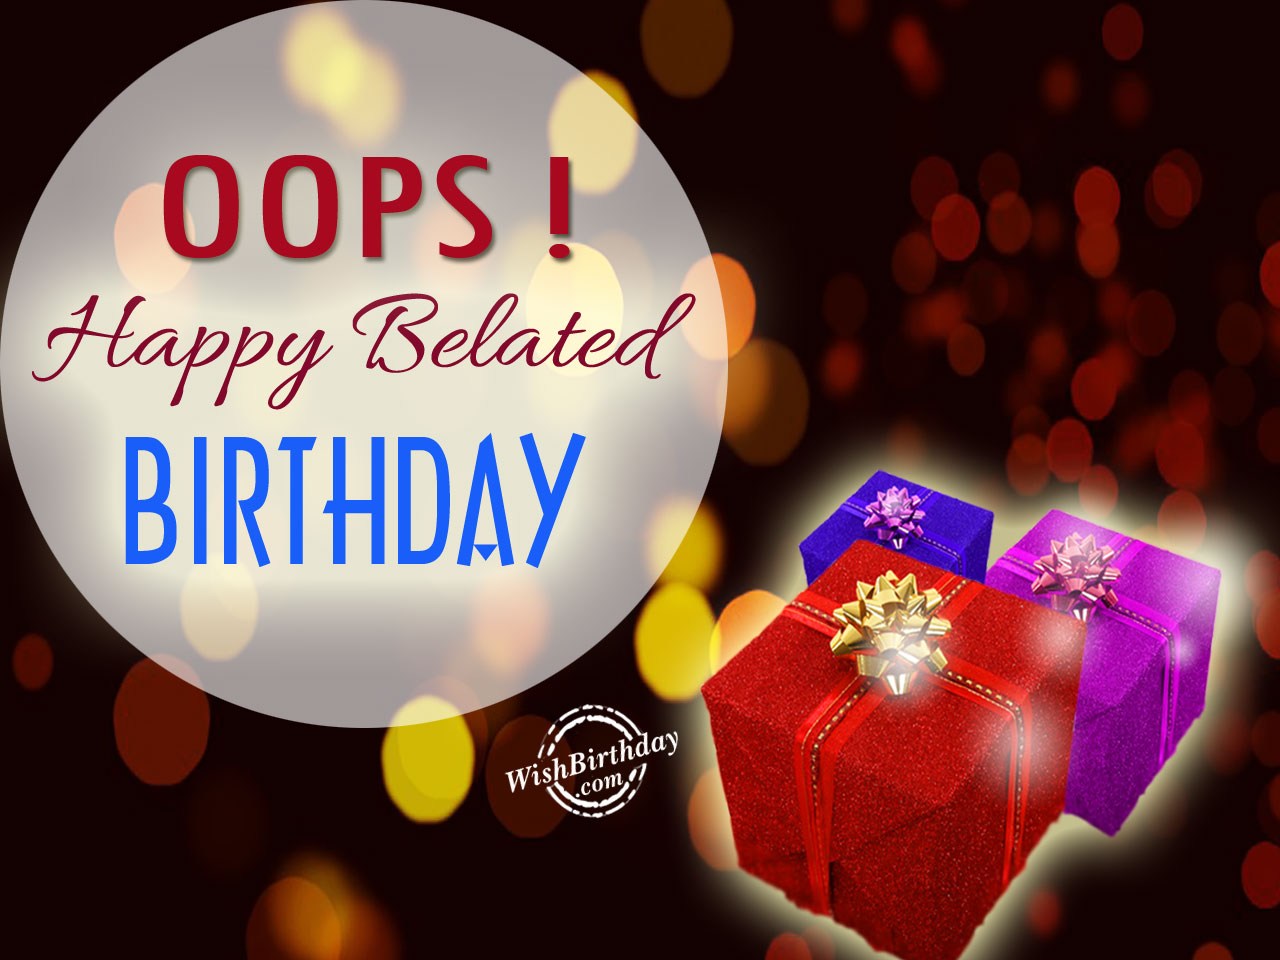 OOps ! happy belated birthday - Birthday Wishes, Happy Birthday ...